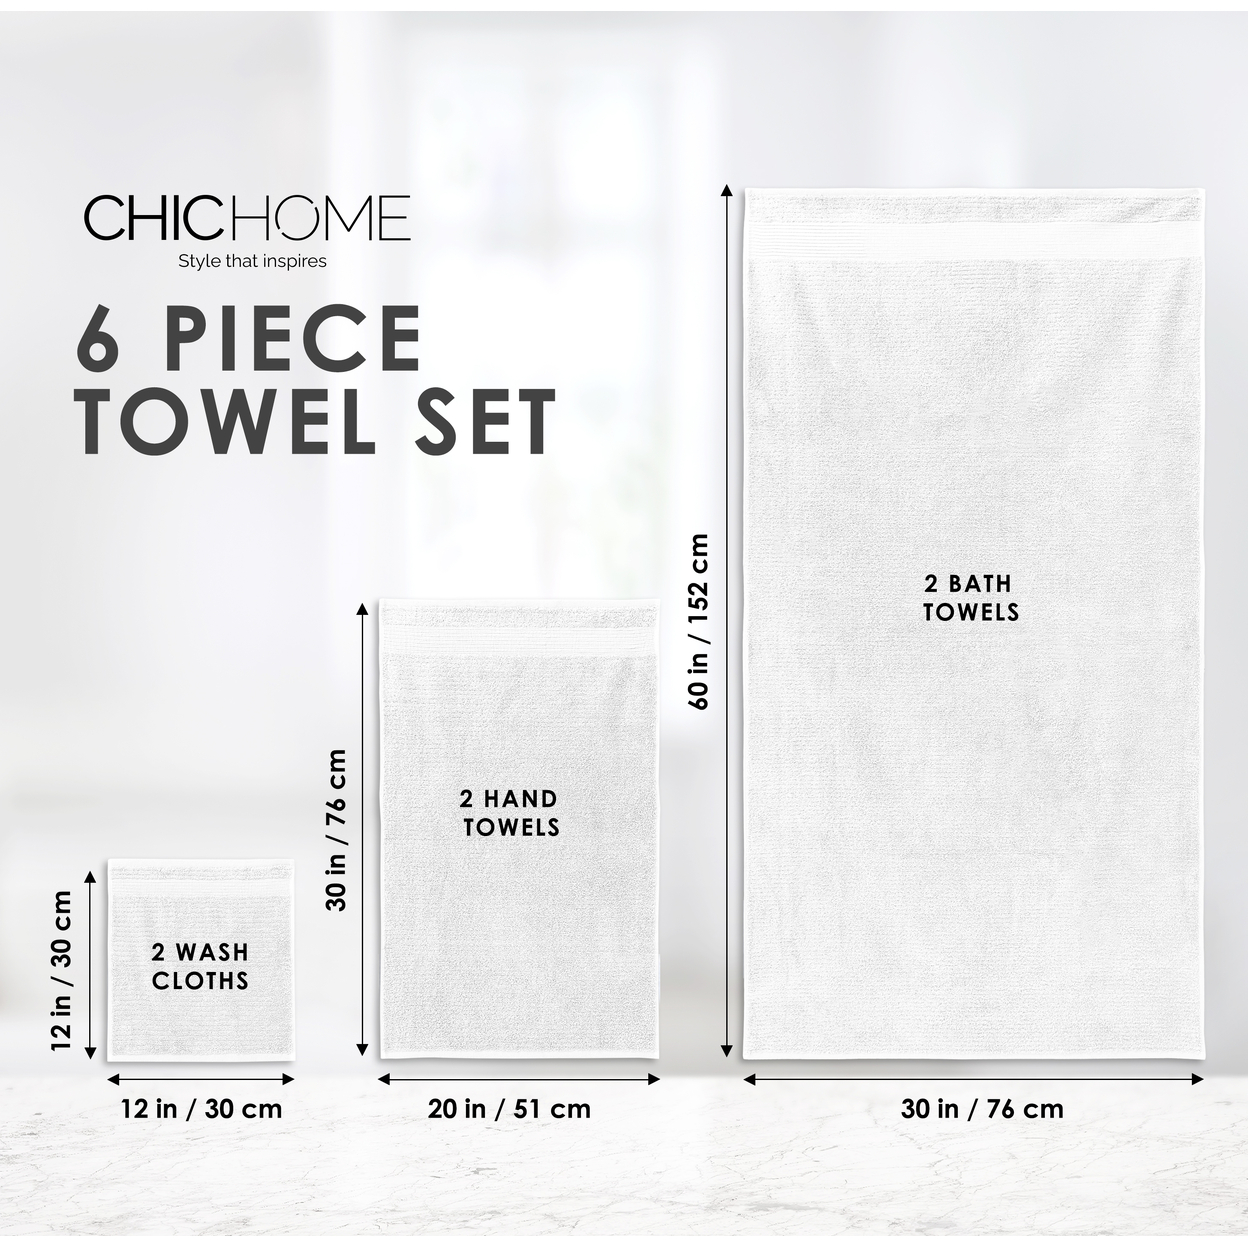 Chic Home Premium 6-Piece 100% Pure Turkish Cotton Towel Set, Jacquard Weave Design, OEKO-TEX Standard 100 Certified - Grey